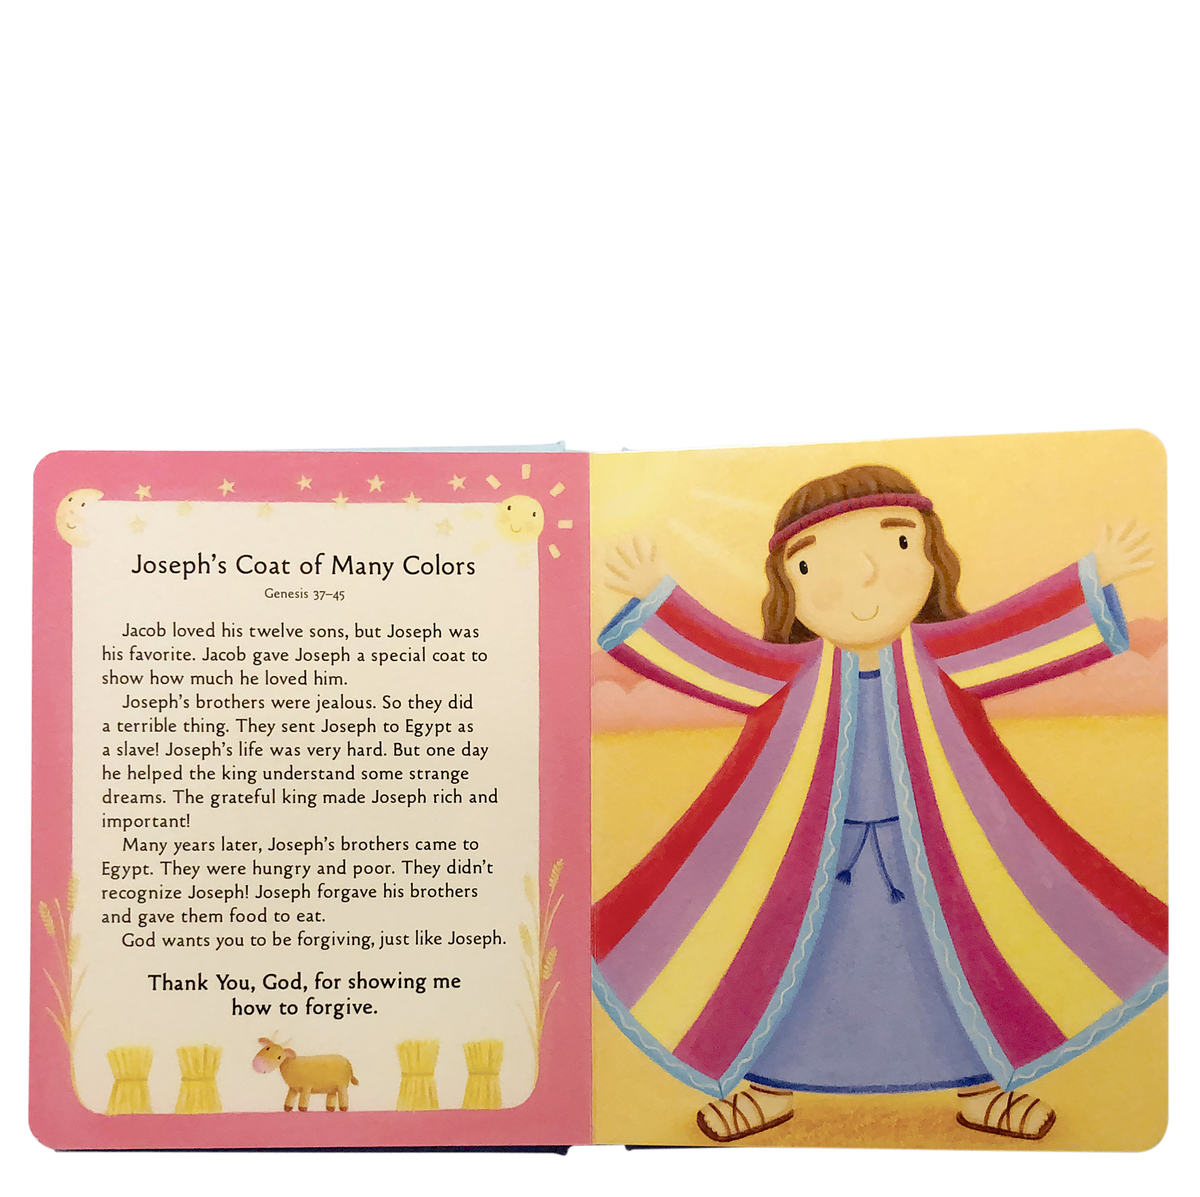 Baby's First Bible Stories Keepsake Board Book